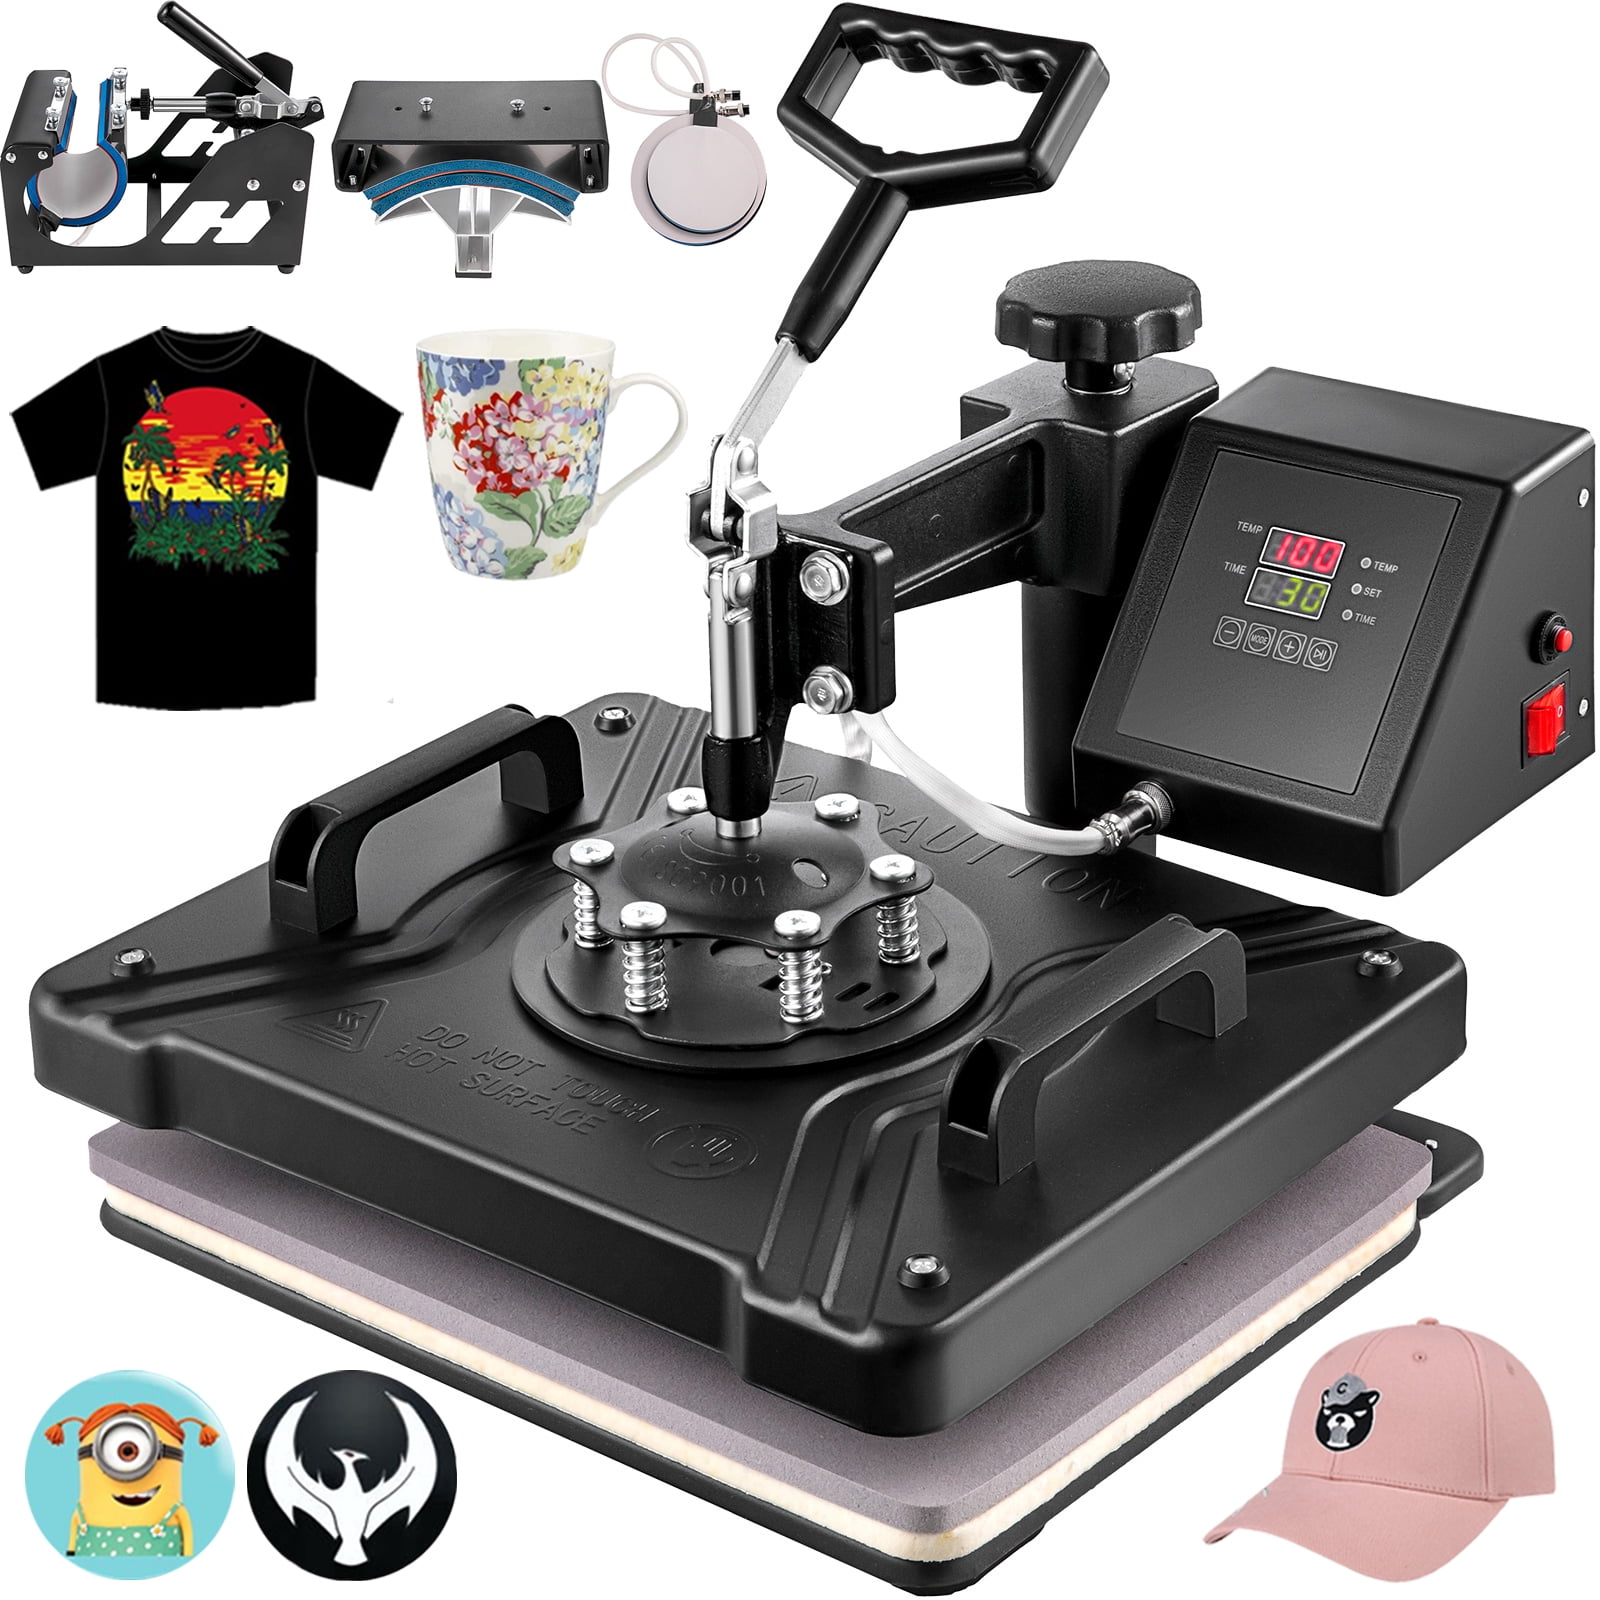 VEVOR Heat Press Machine - 8 in 1 Heat Press Sublimation Machine for DIY T-Shirts/Hats/Mugs/Heat Transfer Projects, 12x15 Mult